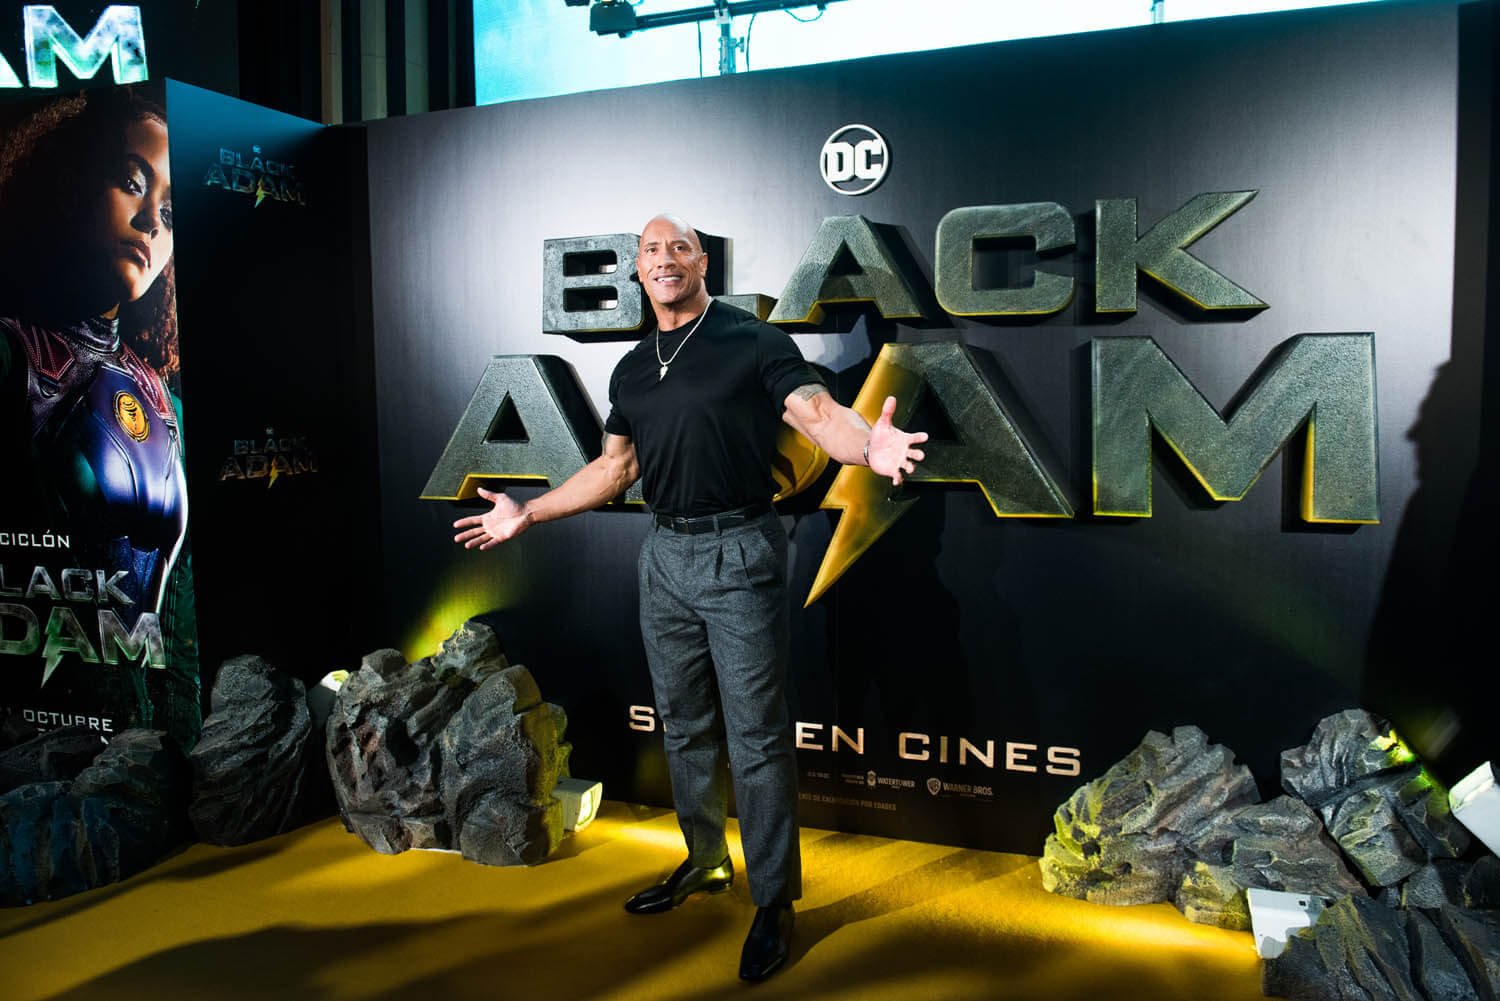 BLACK ADAM - Cinemundo